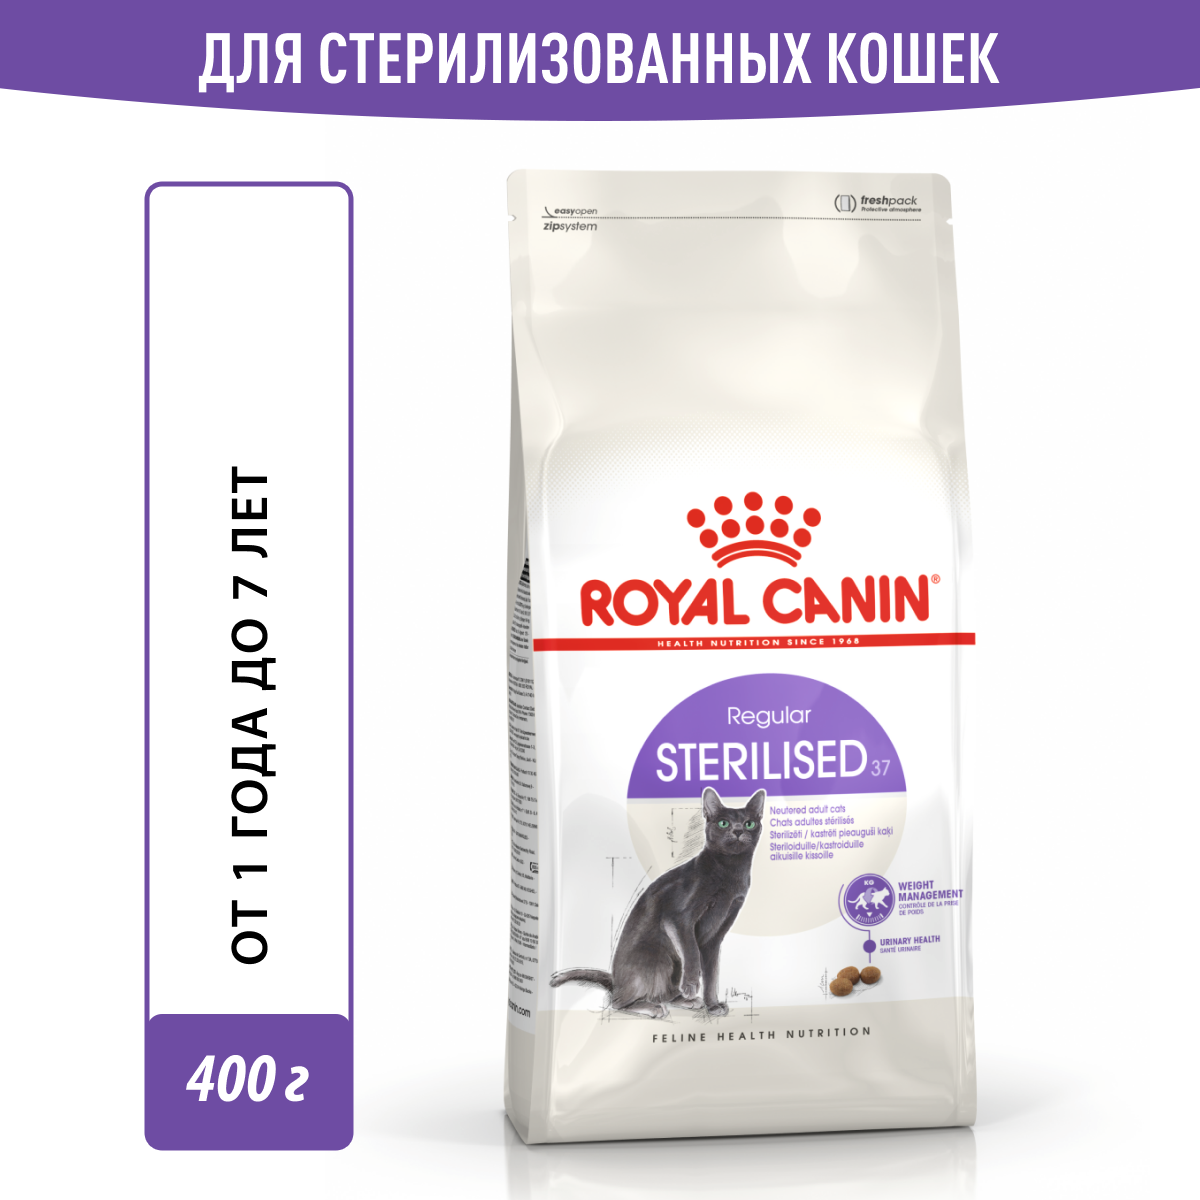 Royal Canin Sterilised 37 Корм для стерилизованных кошек 400г